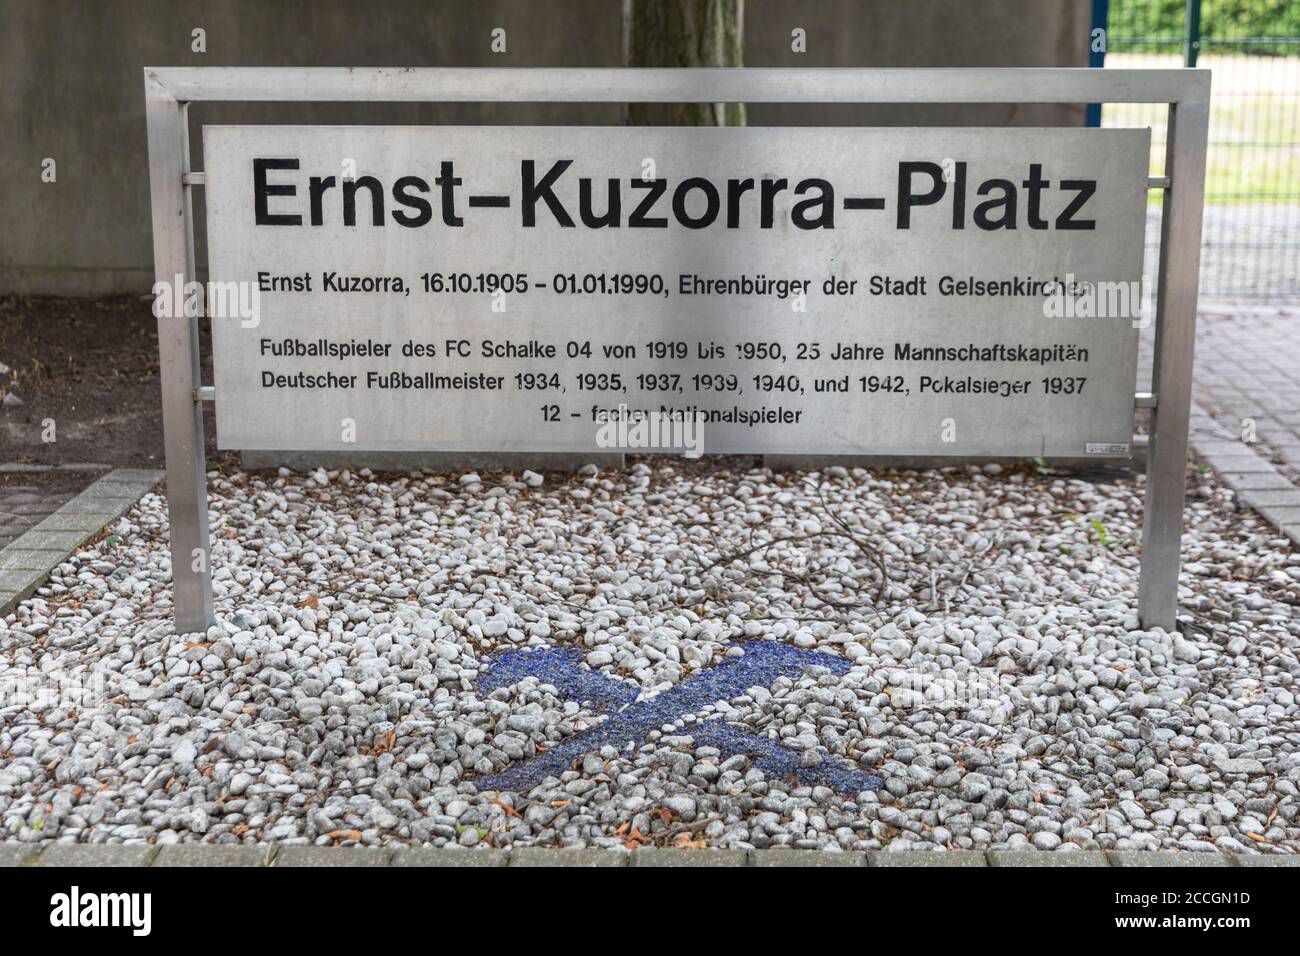 Ernst-Kuzorra-Platz, memorial square to former footballer, Schalker Meile fan area of FC Schalke 04 Football club, Gelsenkirchen, Germany Stock Photo